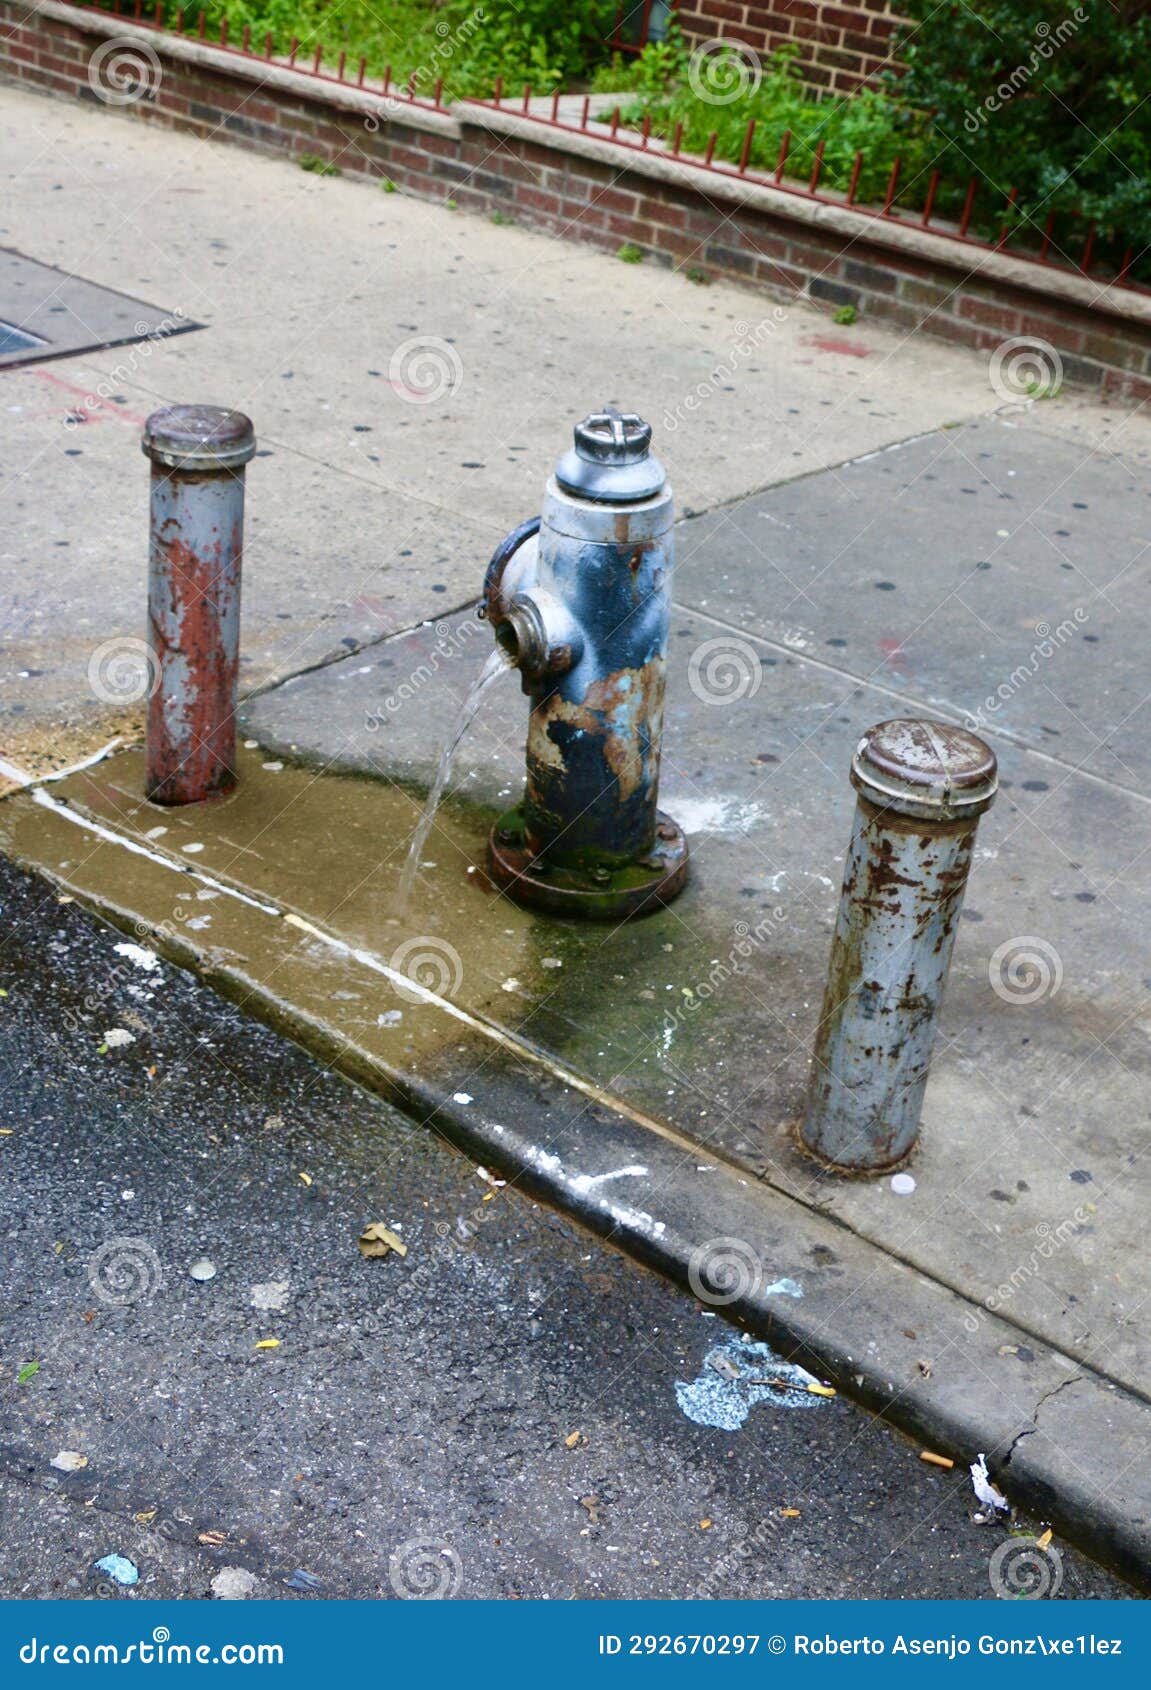 new york city fire hydrants.